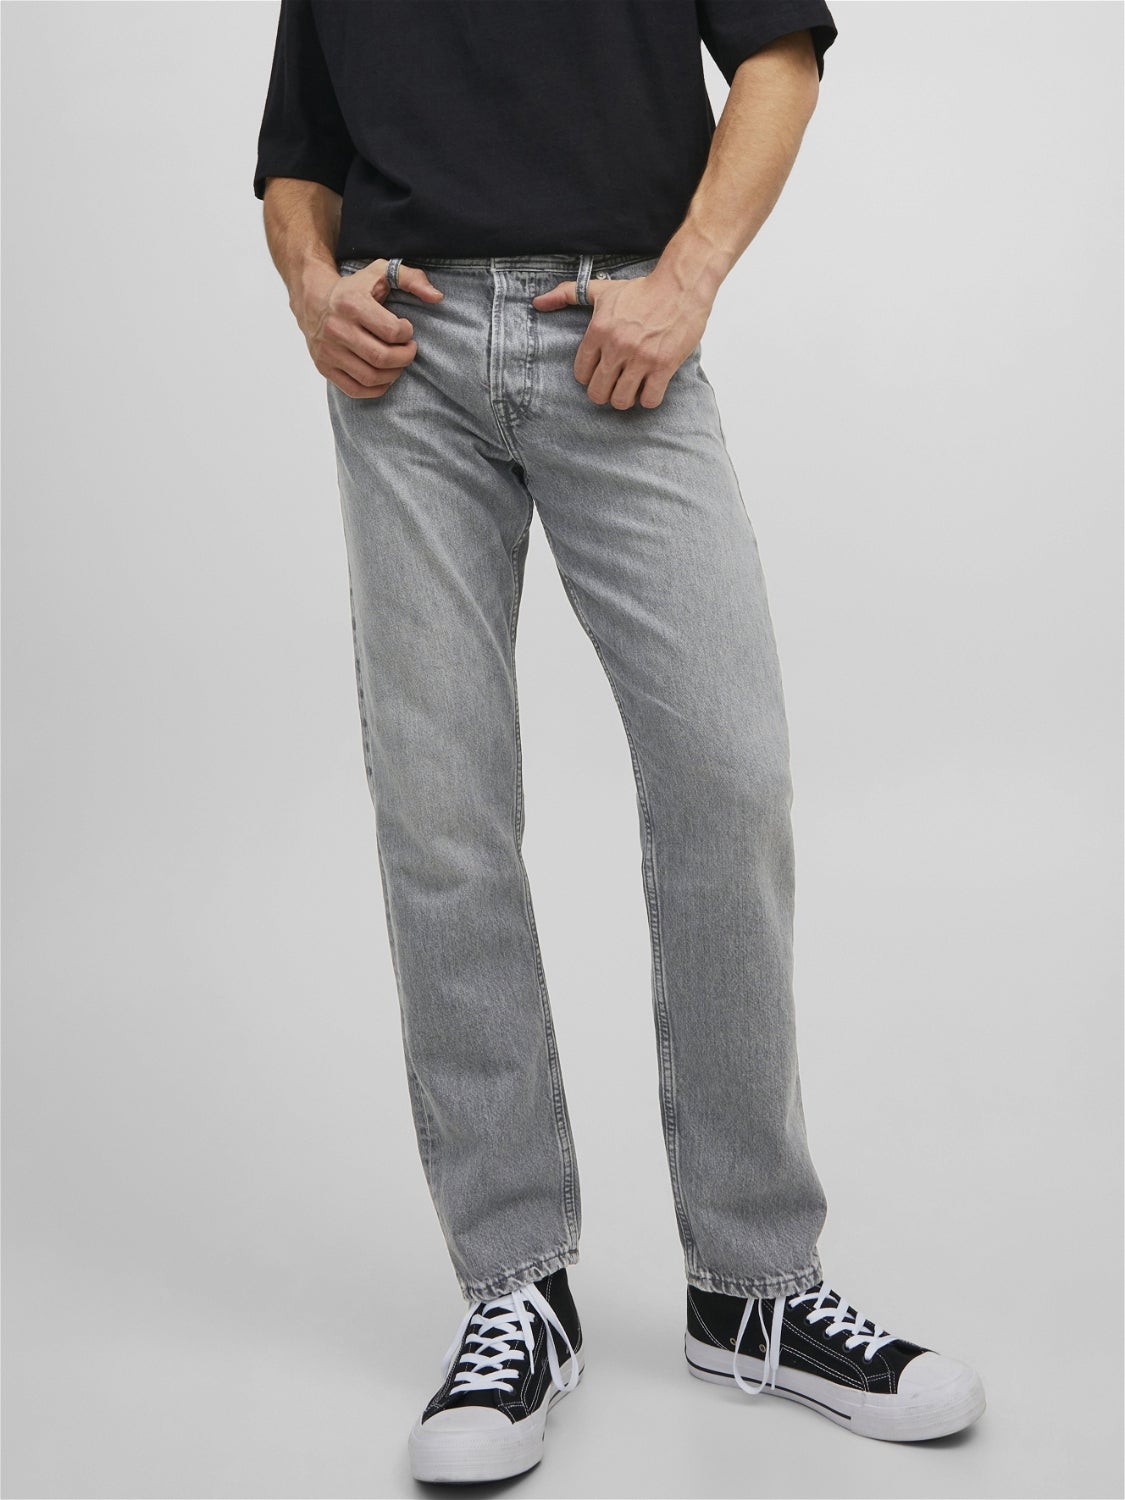 Jack & Jones shorts jeans discount 57% MEN FASHION Jeans Worn-in Gray L 